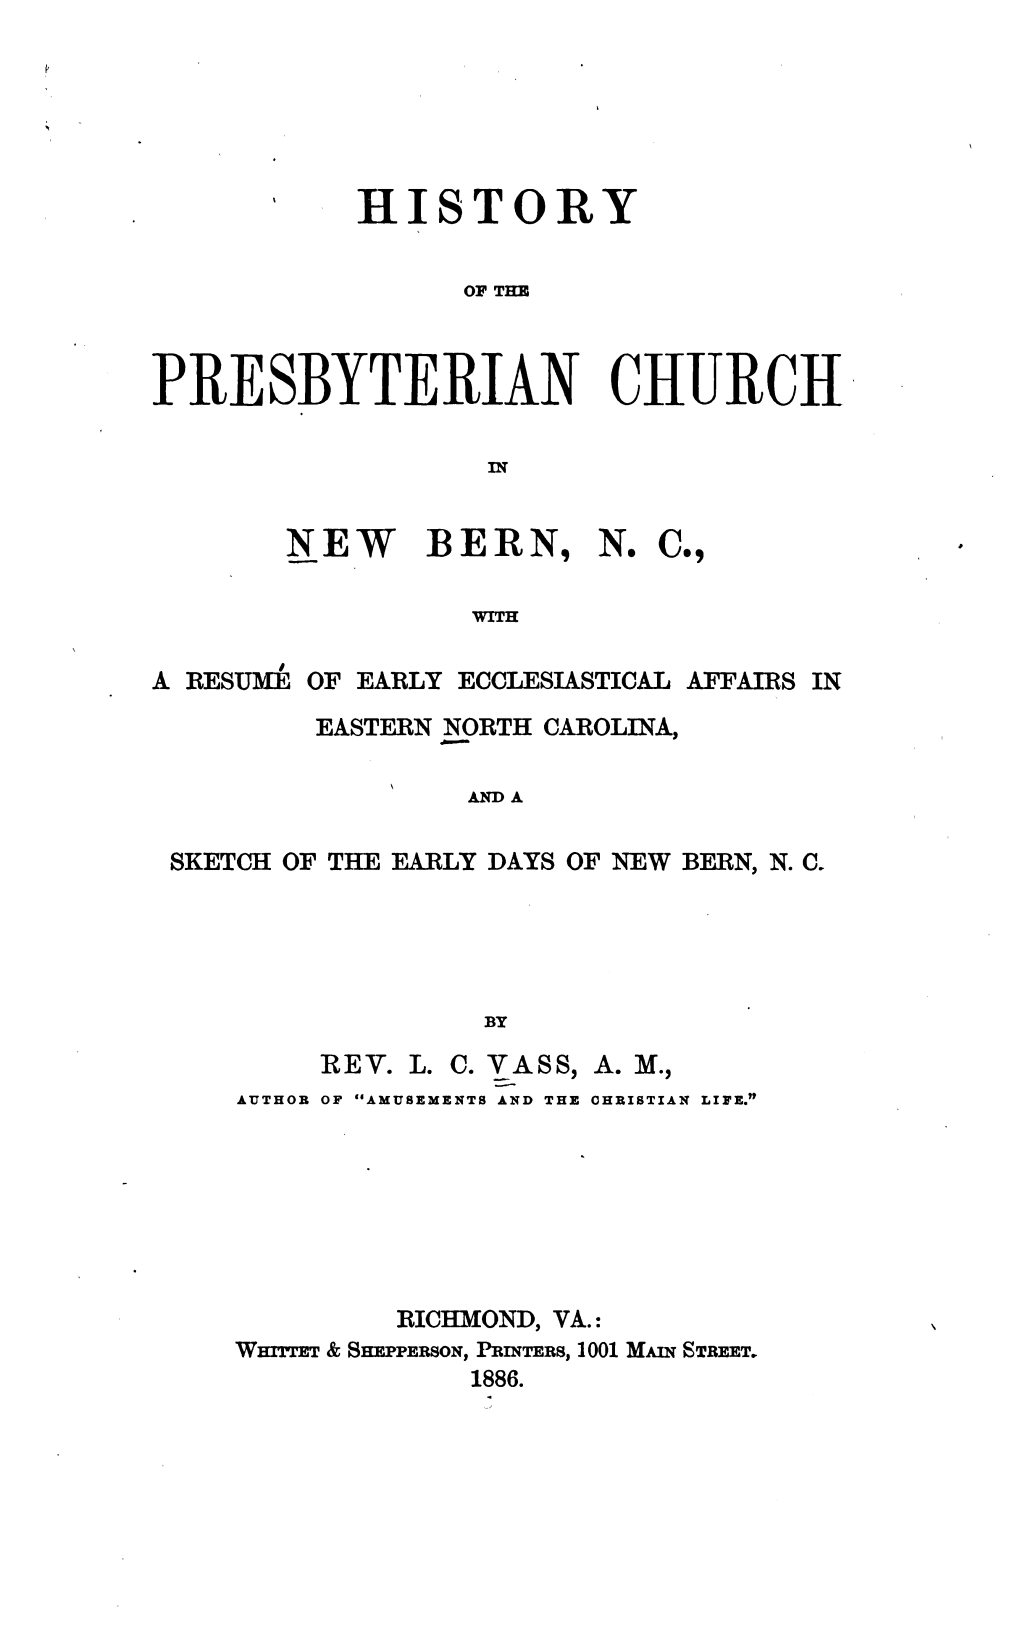 History of the Presbyterian Church in New Bern, N.C